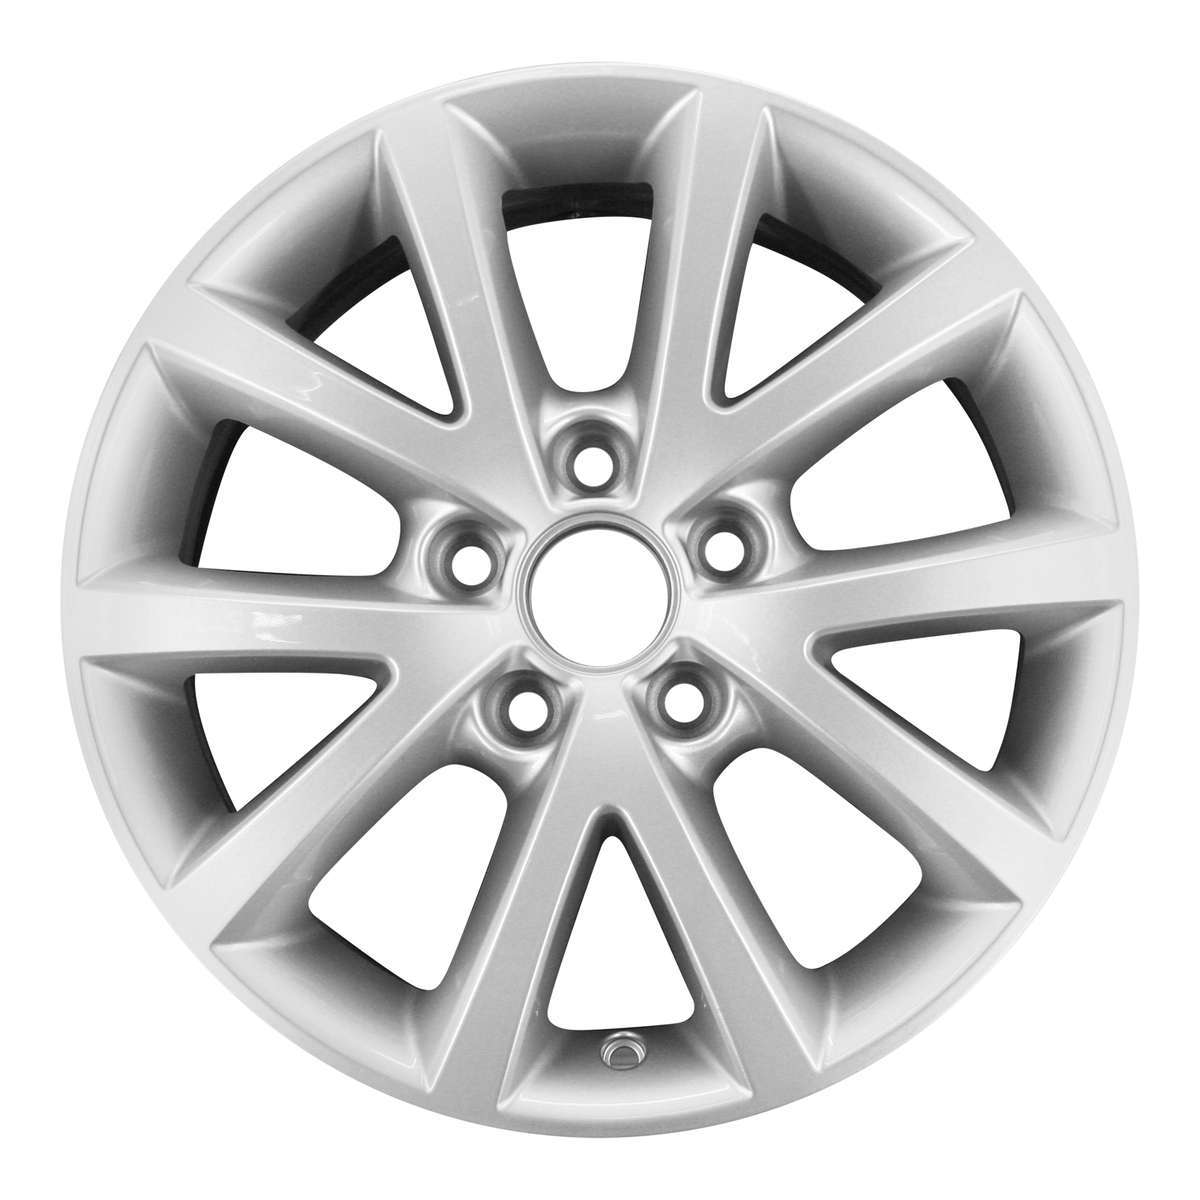 2013 Volkswagen Jetta New 16" Replacement Wheel Rim RW69897S